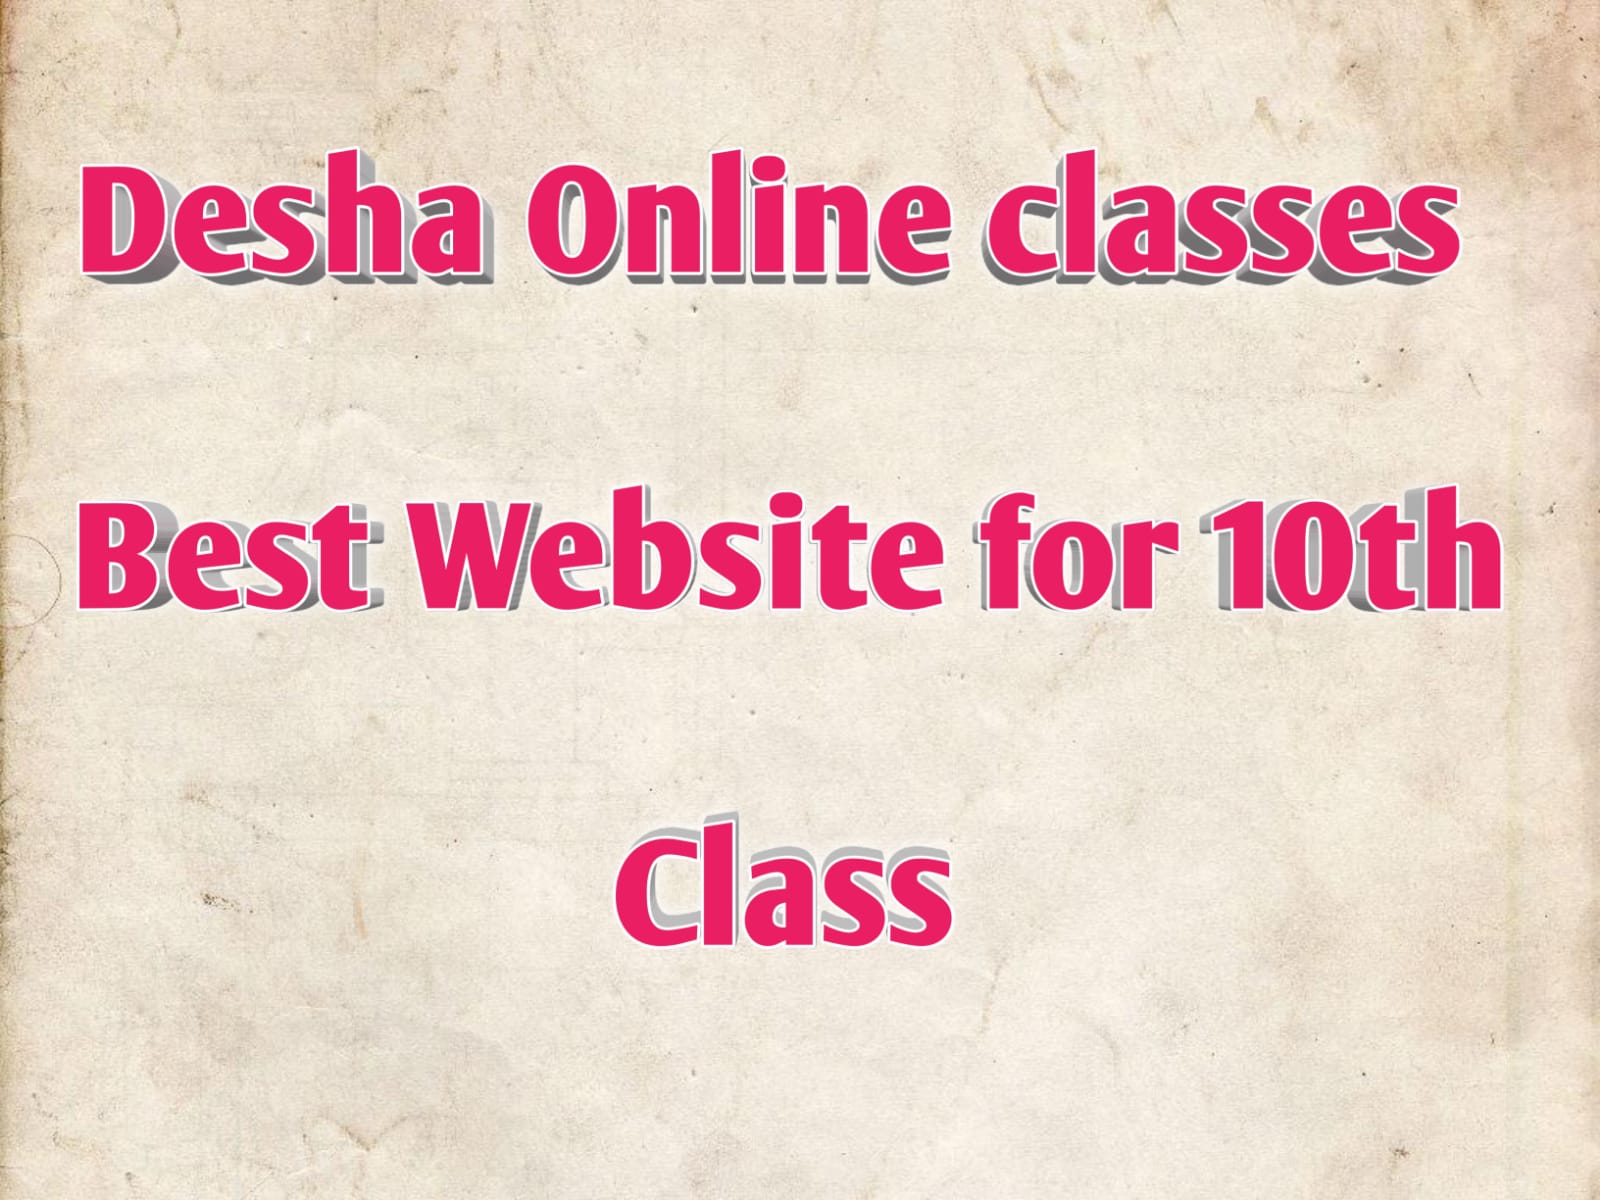 Best Website for 10th class